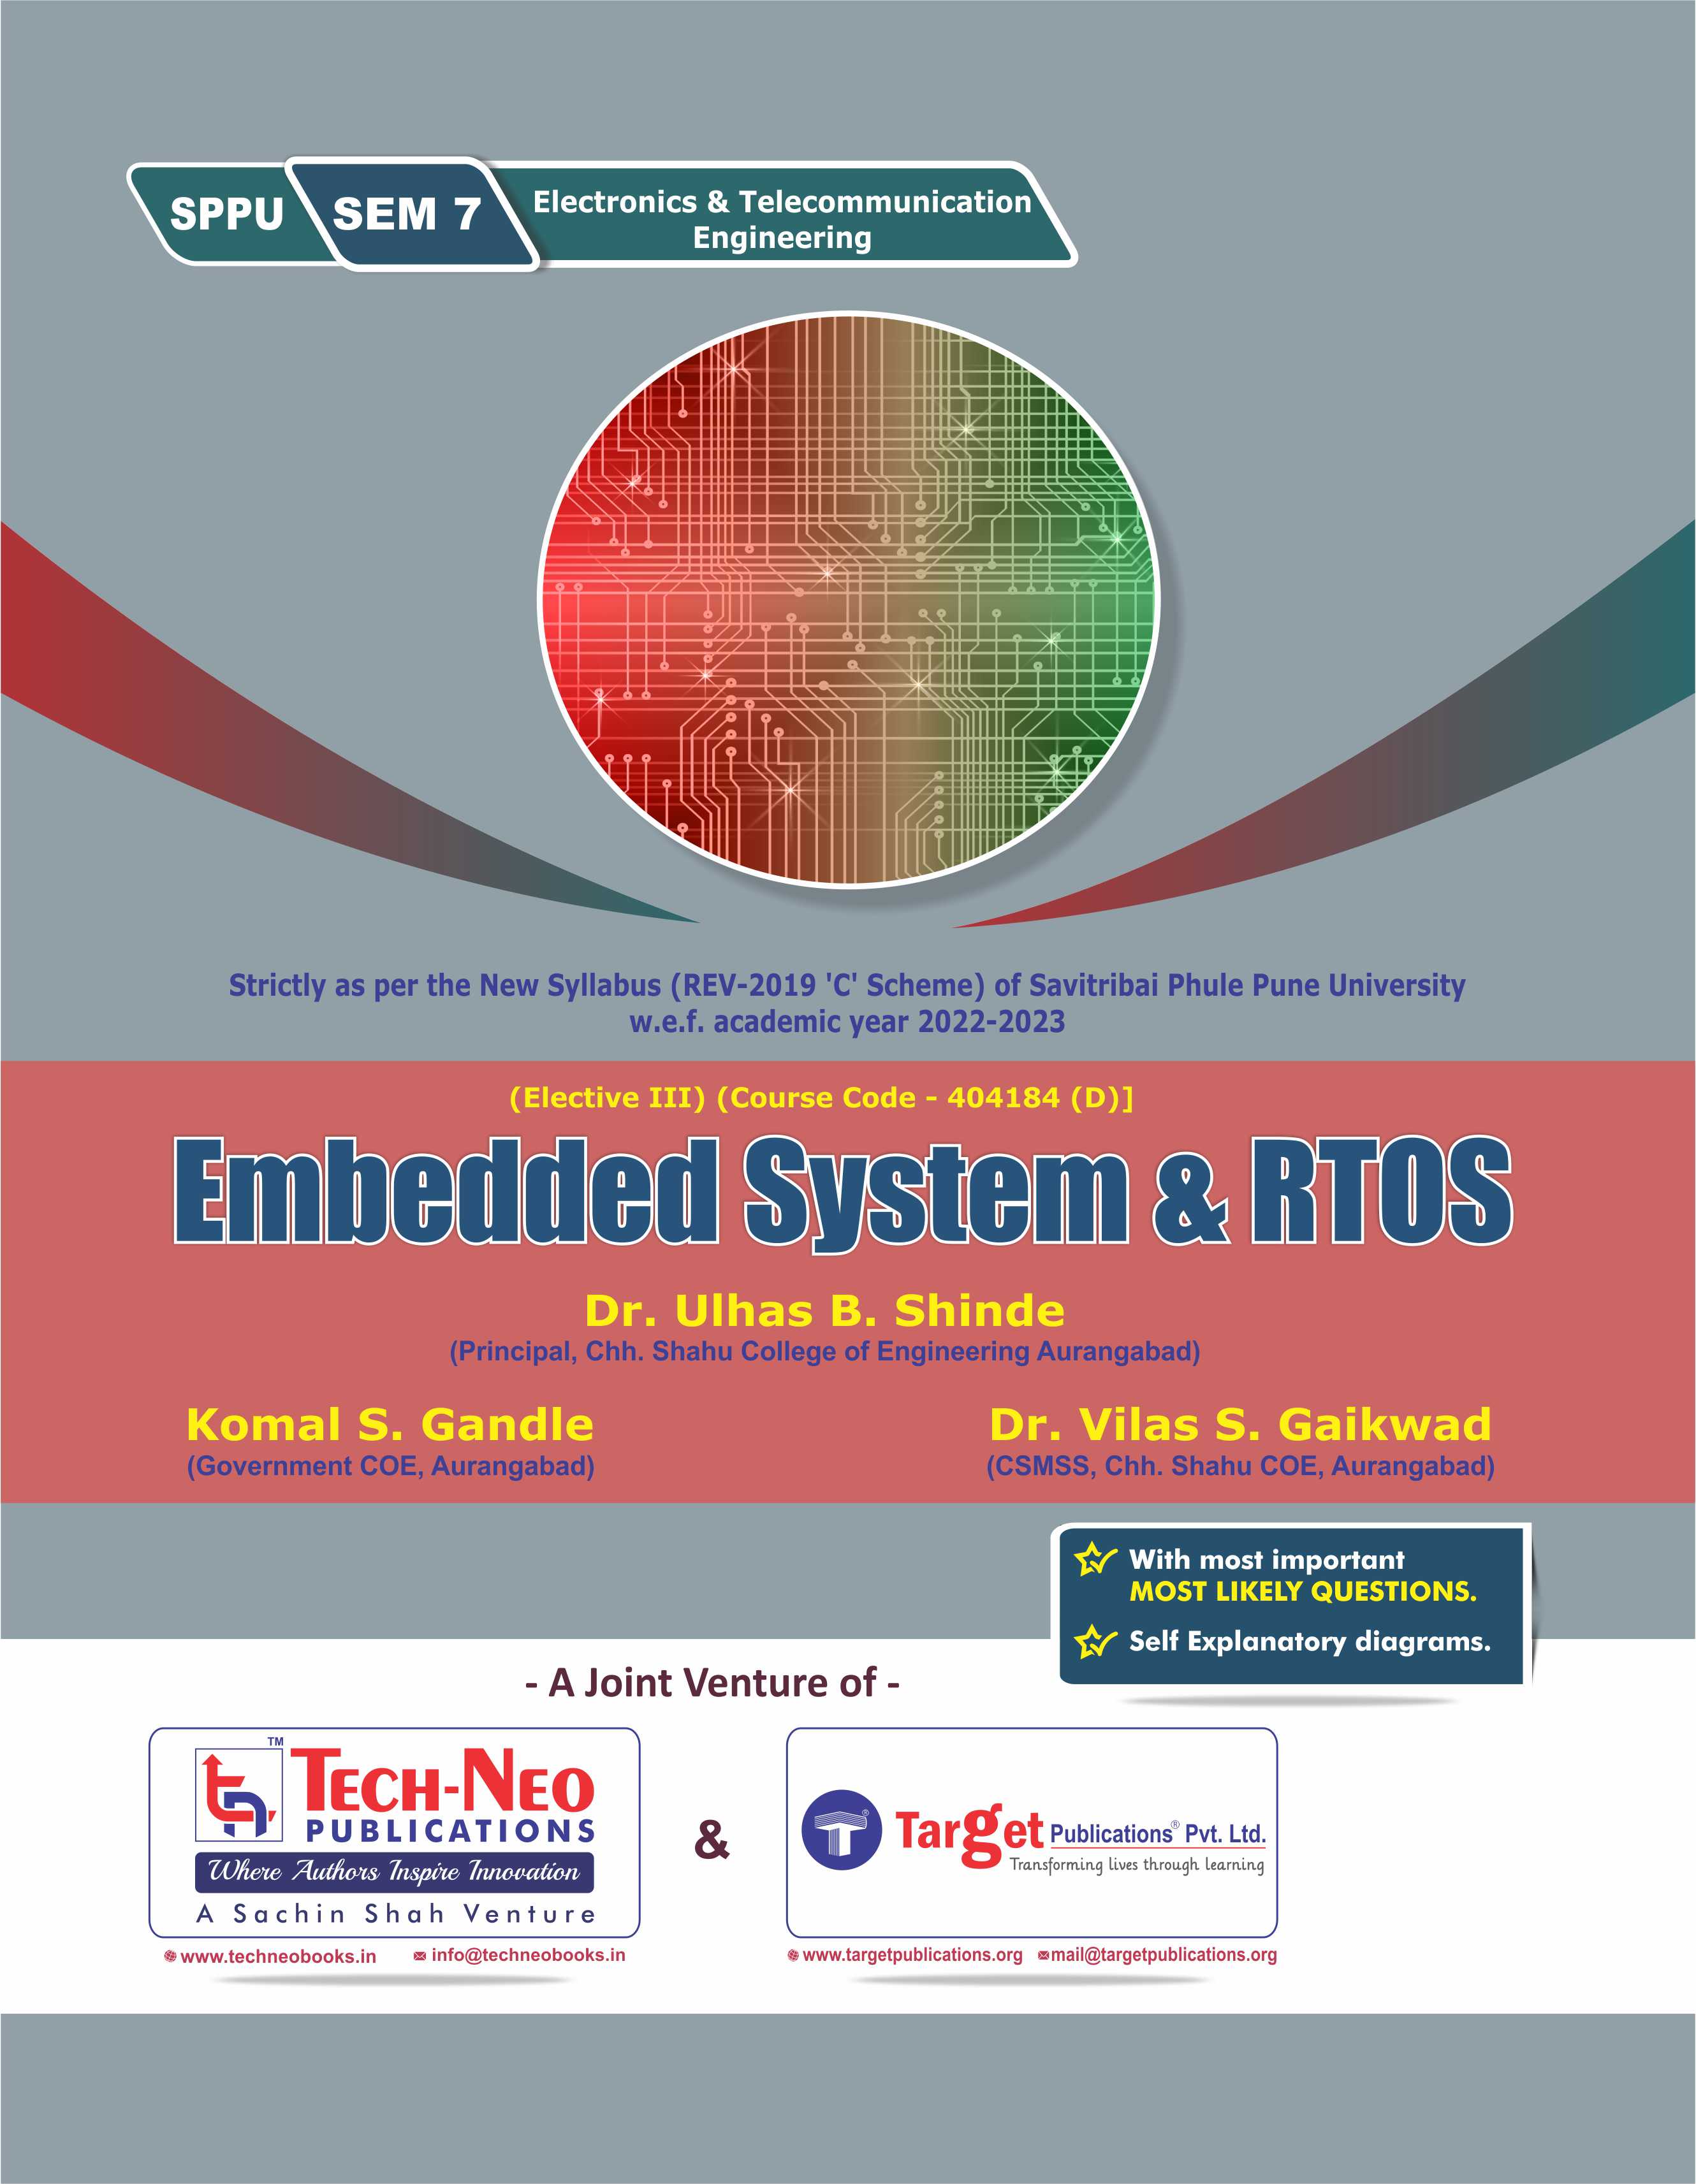 Embedded System & RTOS